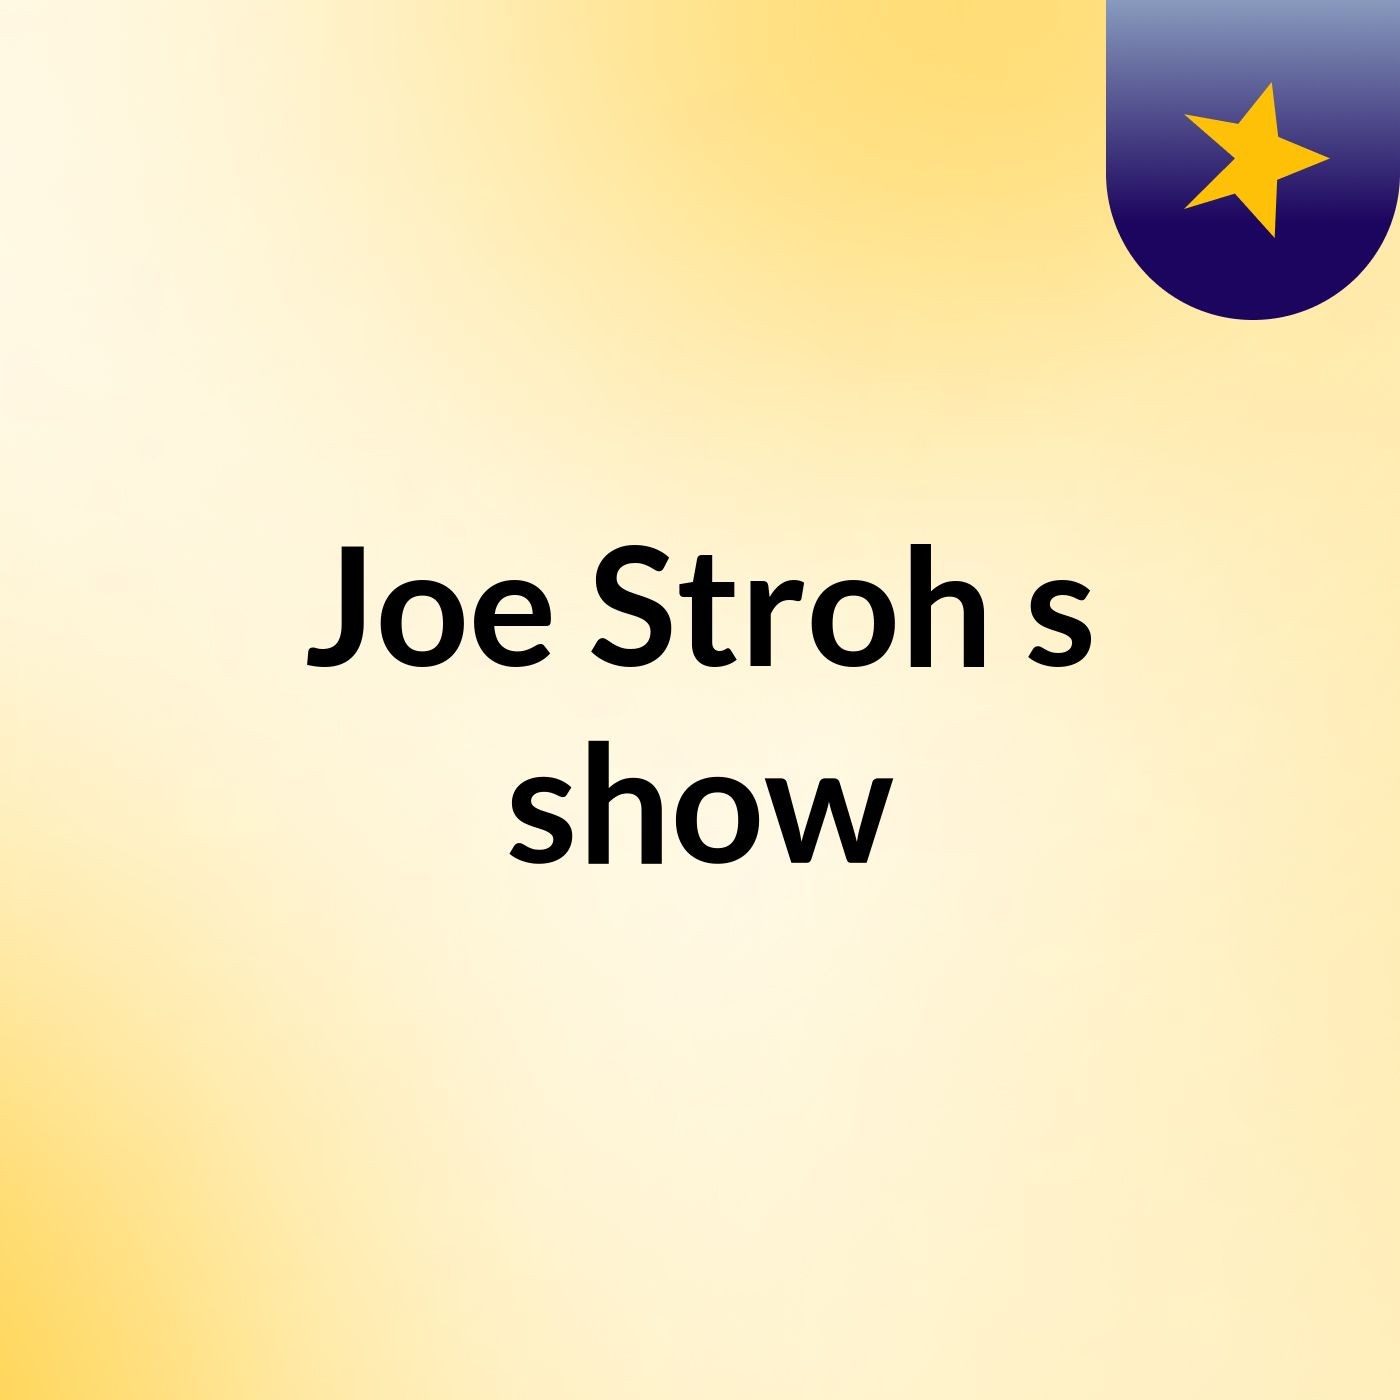 Joe Stroh's show